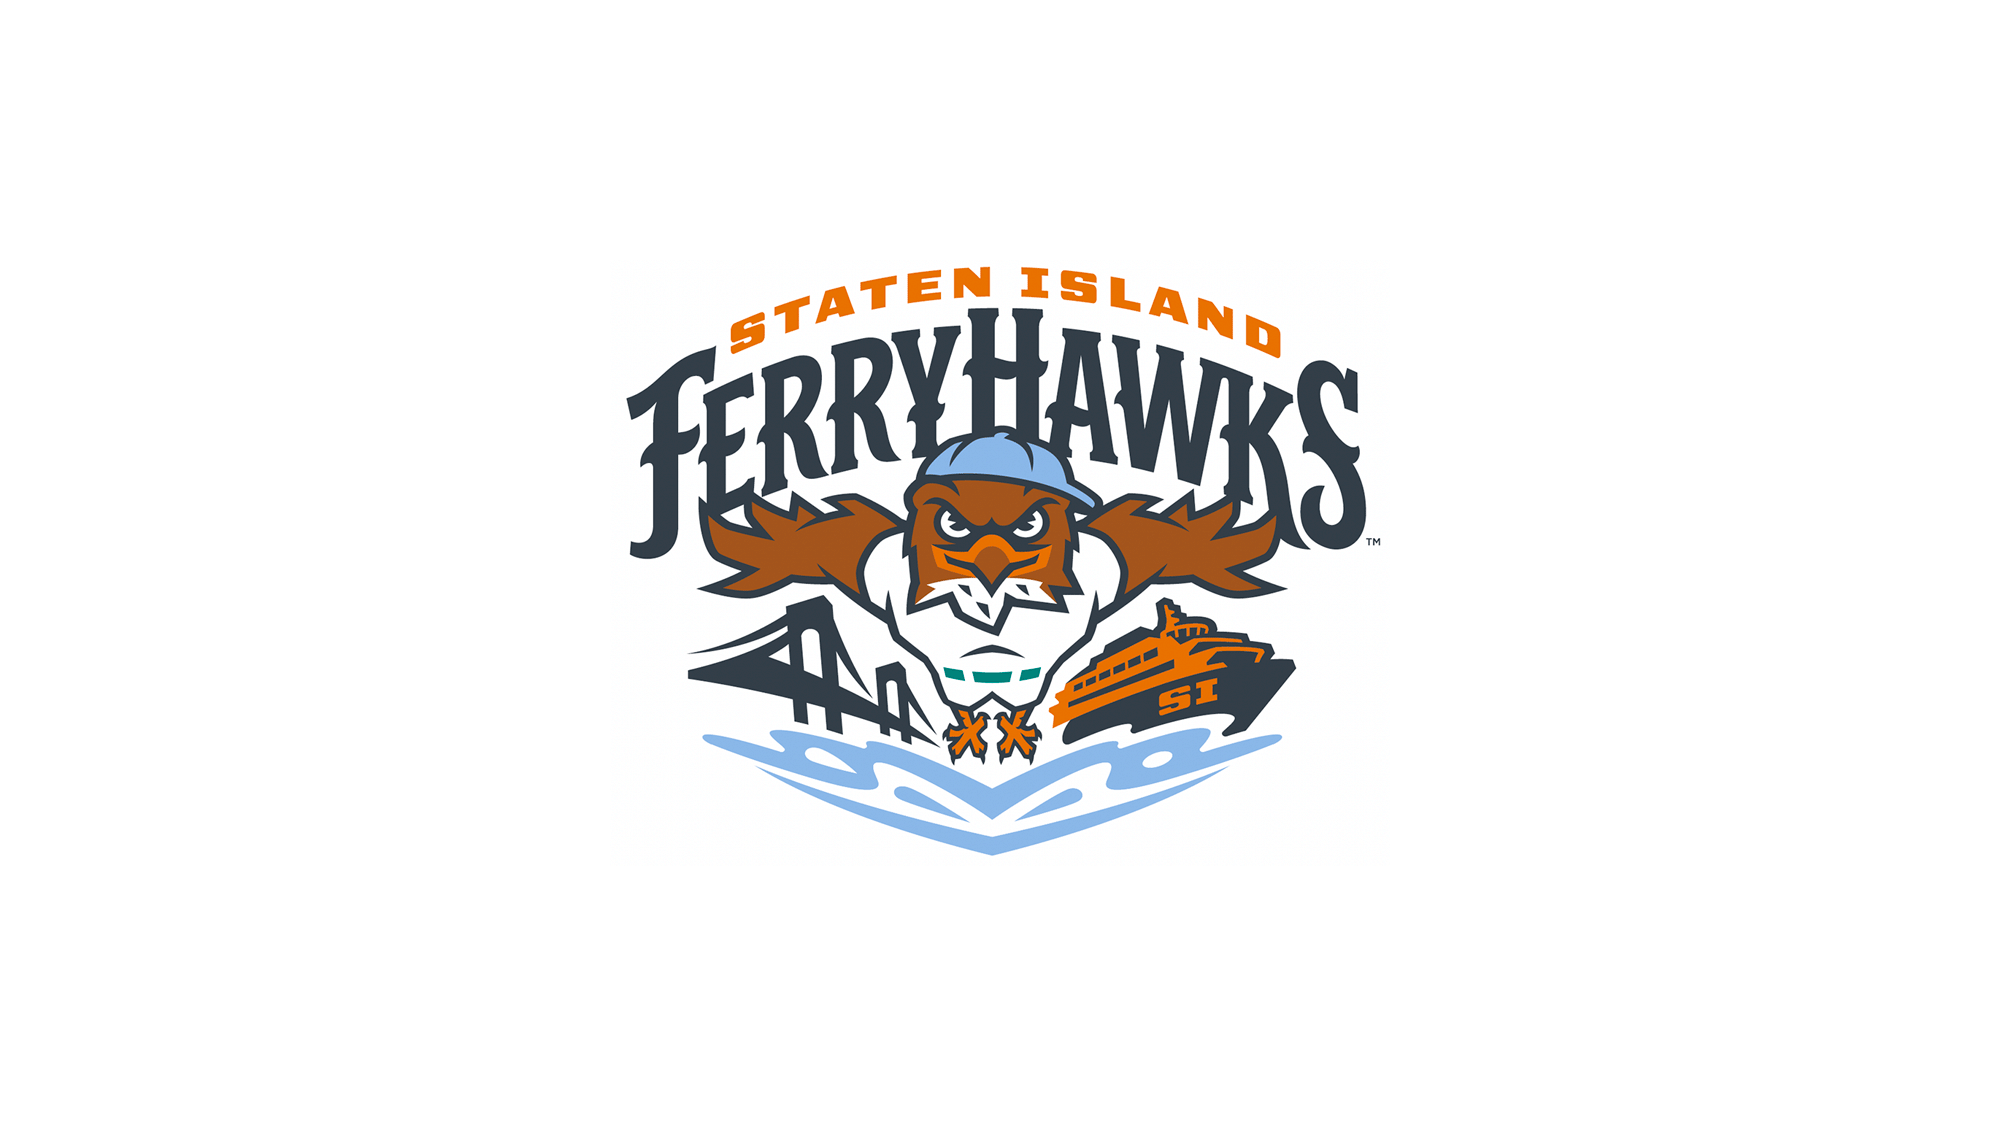 Brand New: New Logos for Staten Island FerryHawks by Skye Design Studios